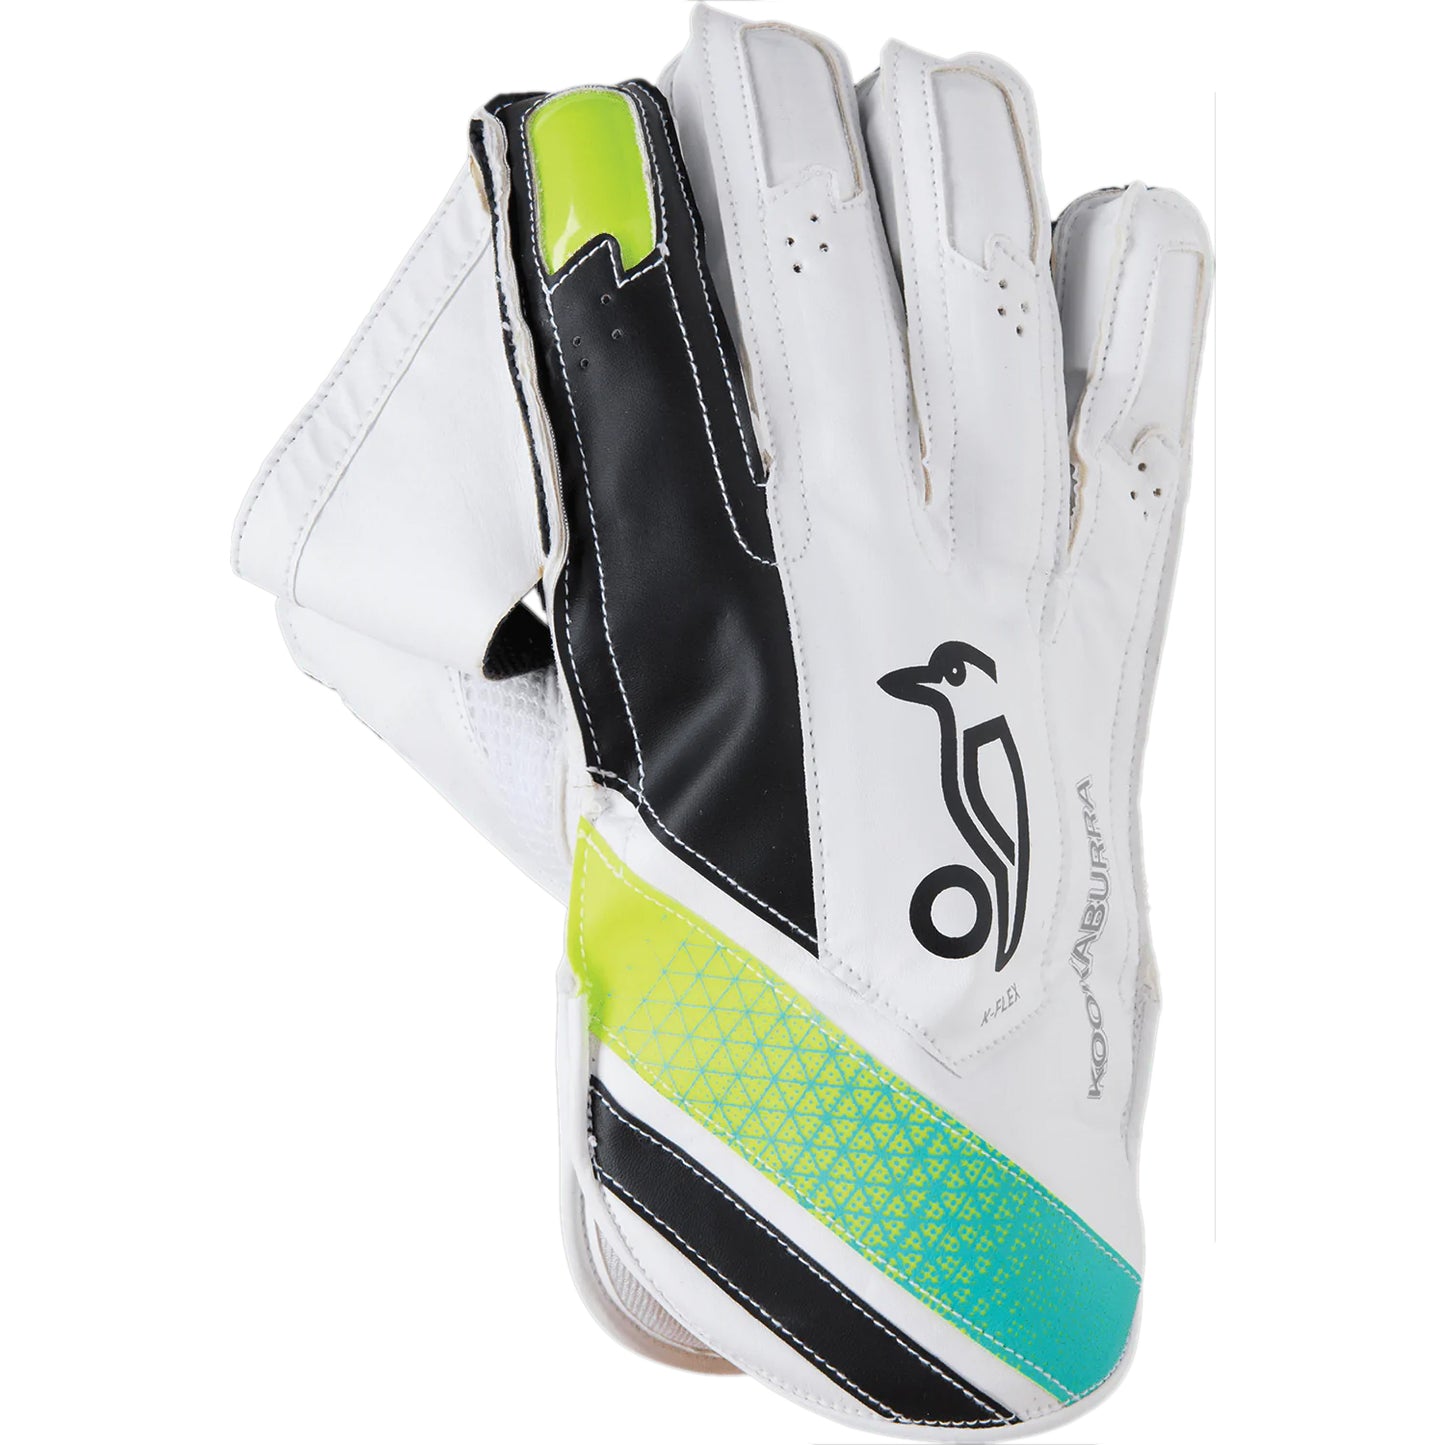 Kookaburra Rapid Pro 2.0 Wicket keeping Gloves - Best Price online Prokicksports.com